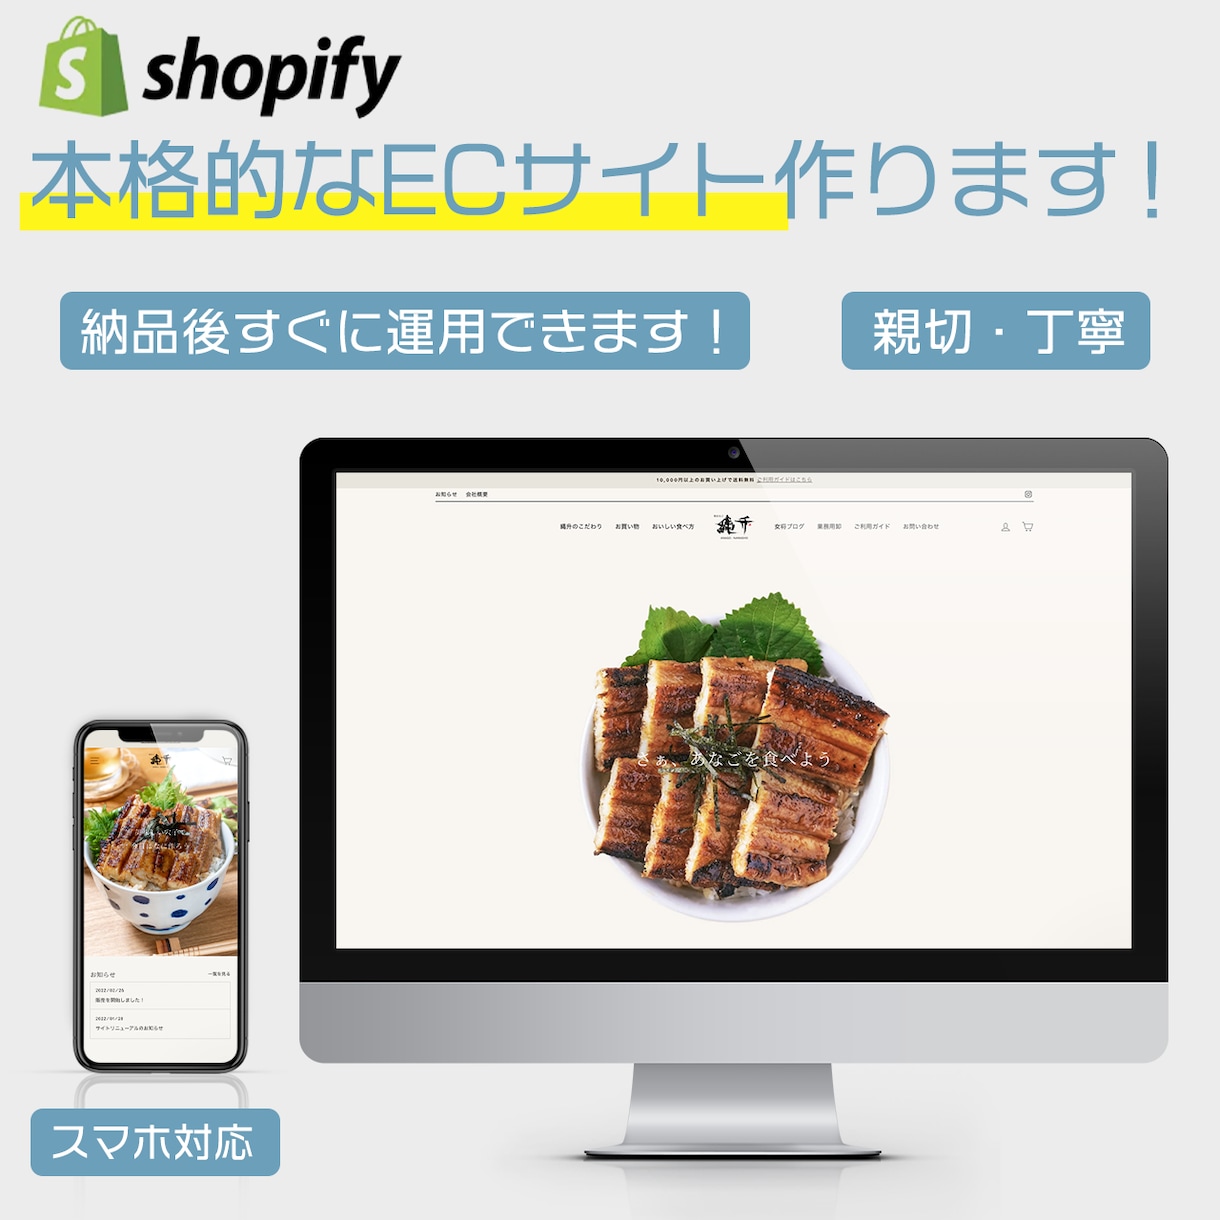 Shopifyで本格的なネットショップを構築します 文章作成、ブランディングも含めて全面的にサポート イメージ1